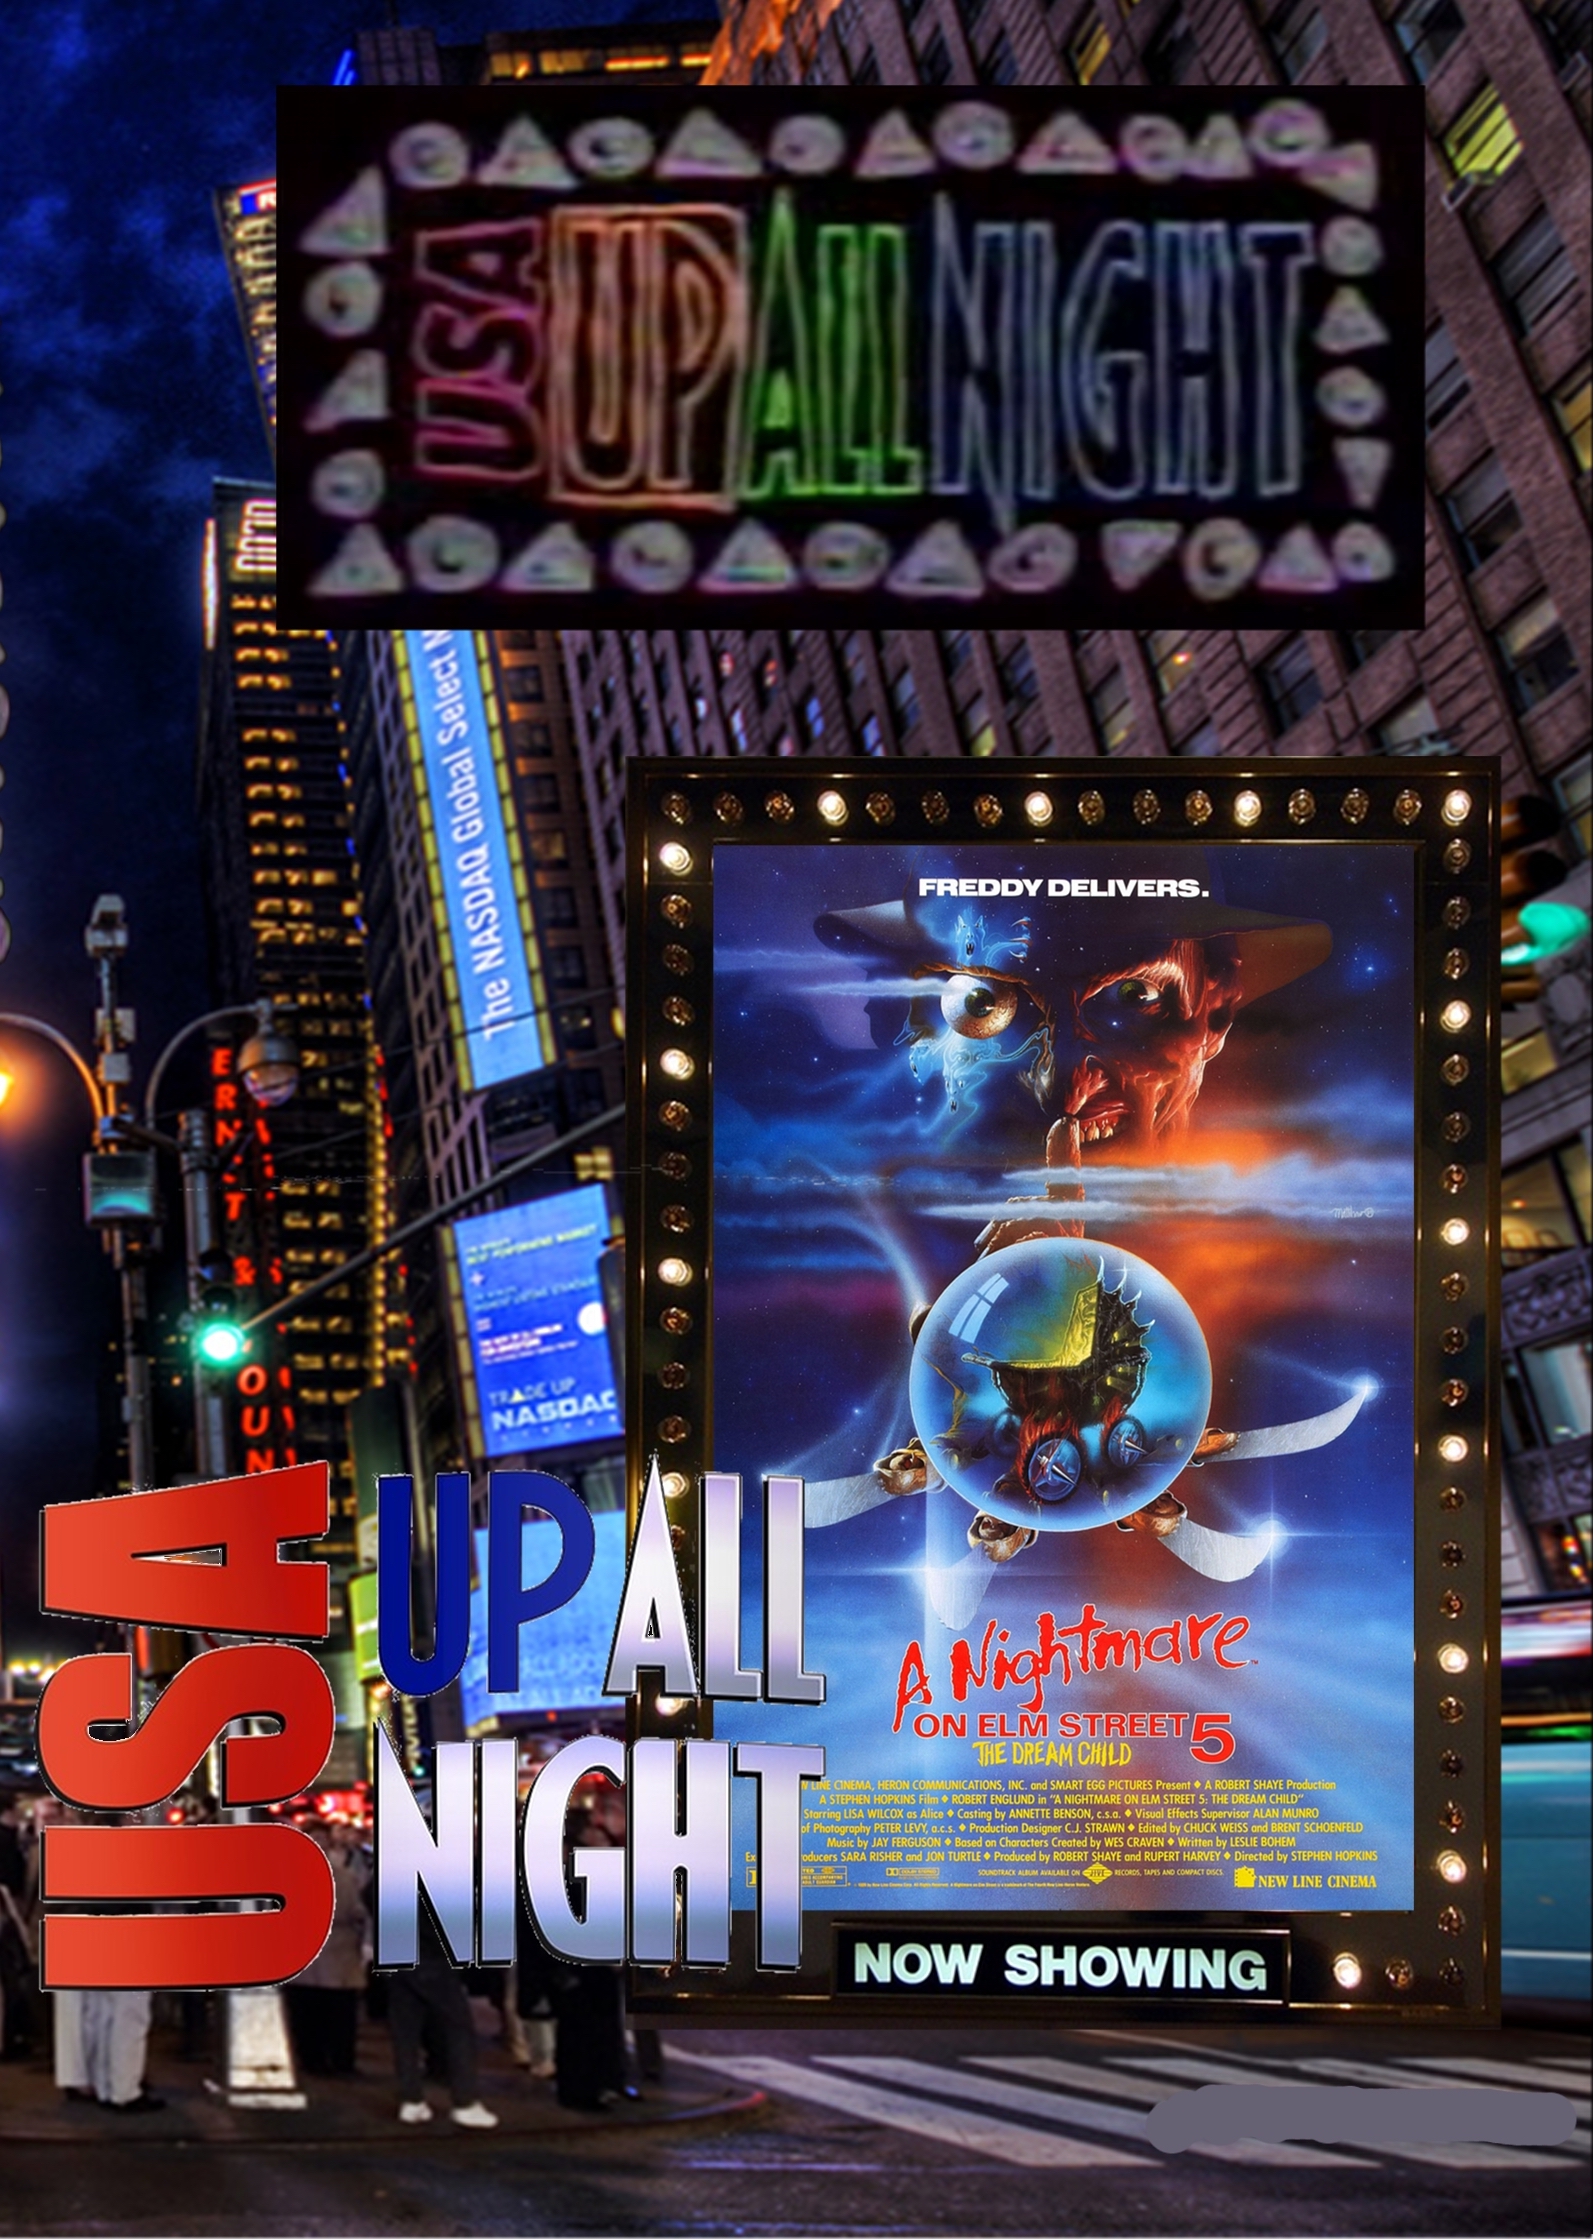 Up All Night - A Nightmare On Elm Street Part 5 DVD